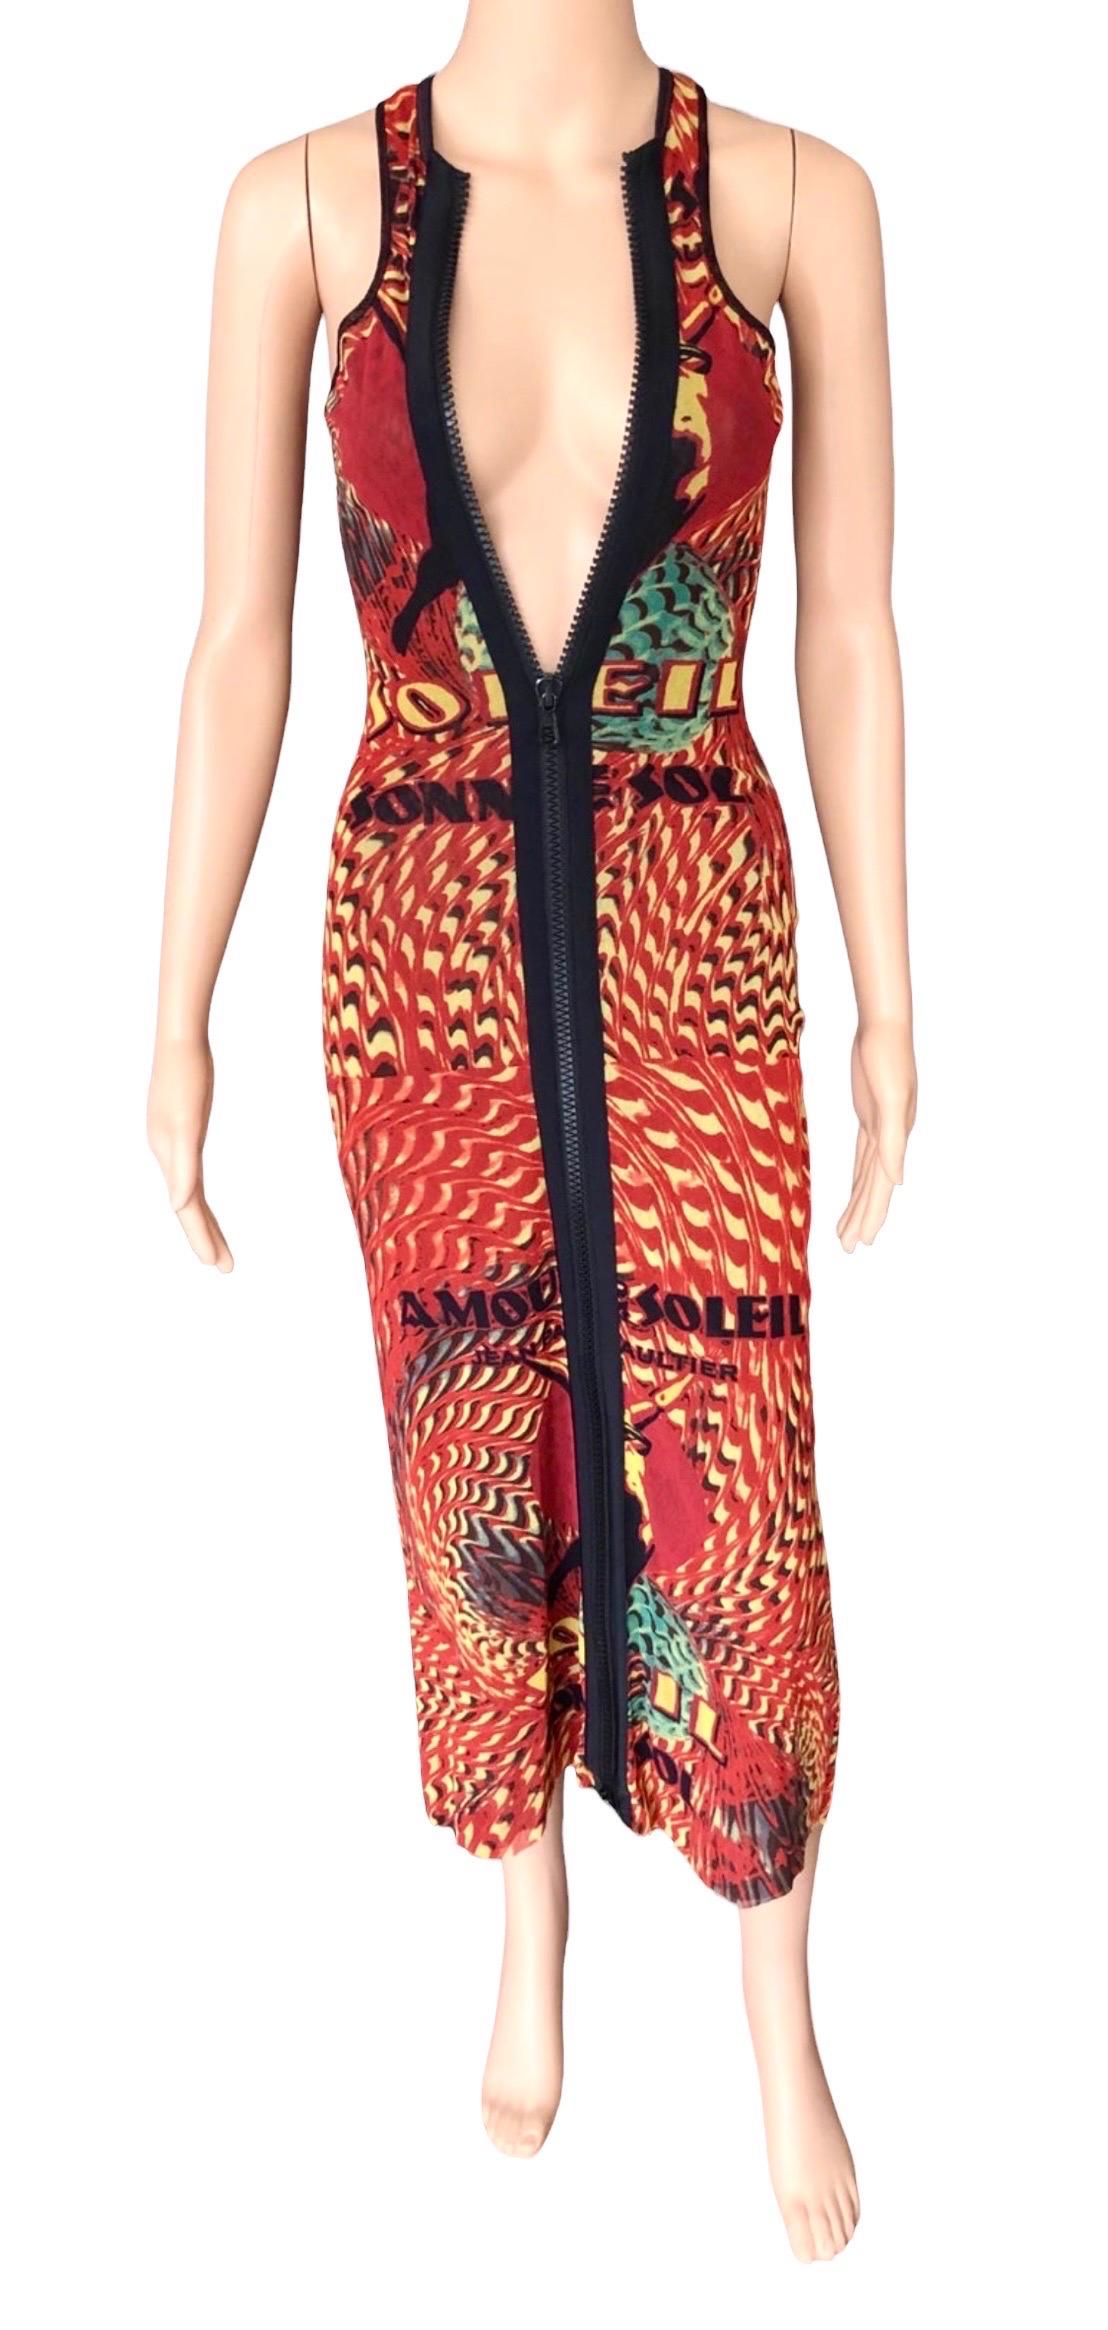 Jean Paul Gaultier Soleil S/S 1999 Amour au Soleil Bodycon Mesh Maxi Dress In Good Condition For Sale In Naples, FL